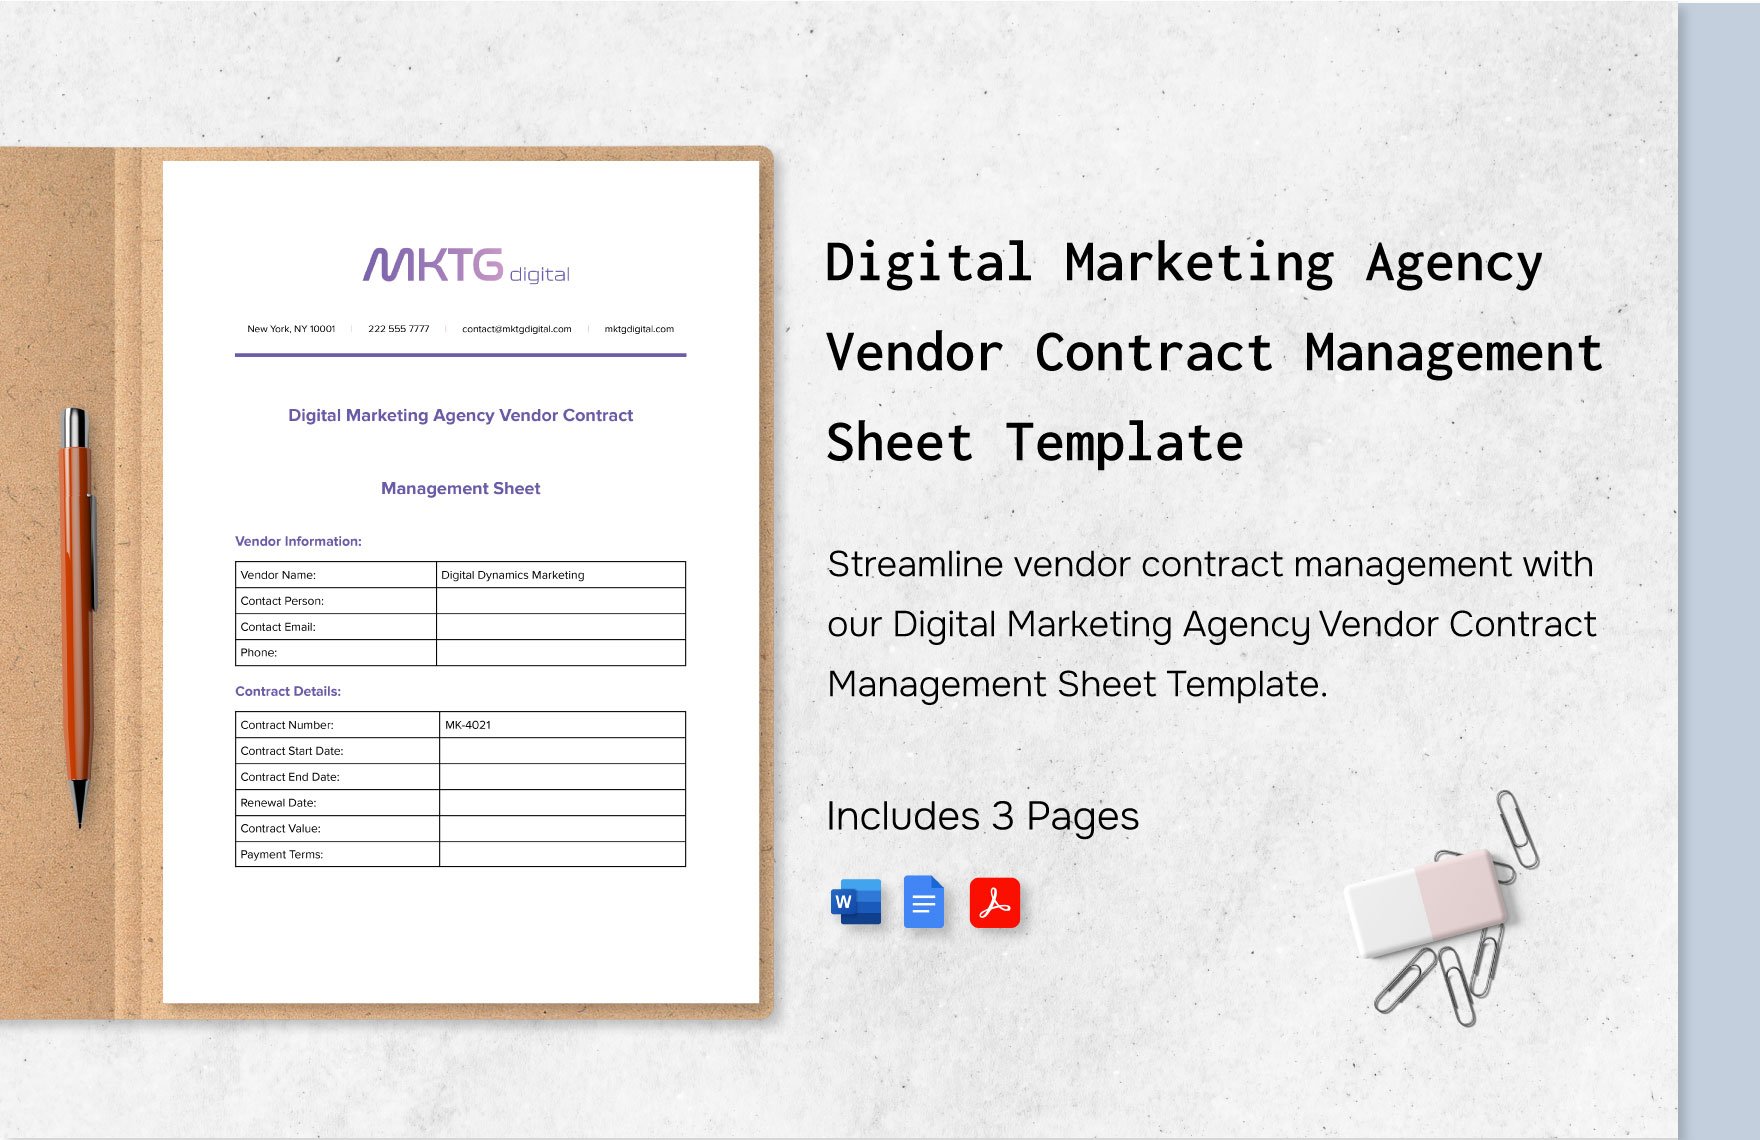 Digital Marketing Agency Vendor Contract Management Sheet Template